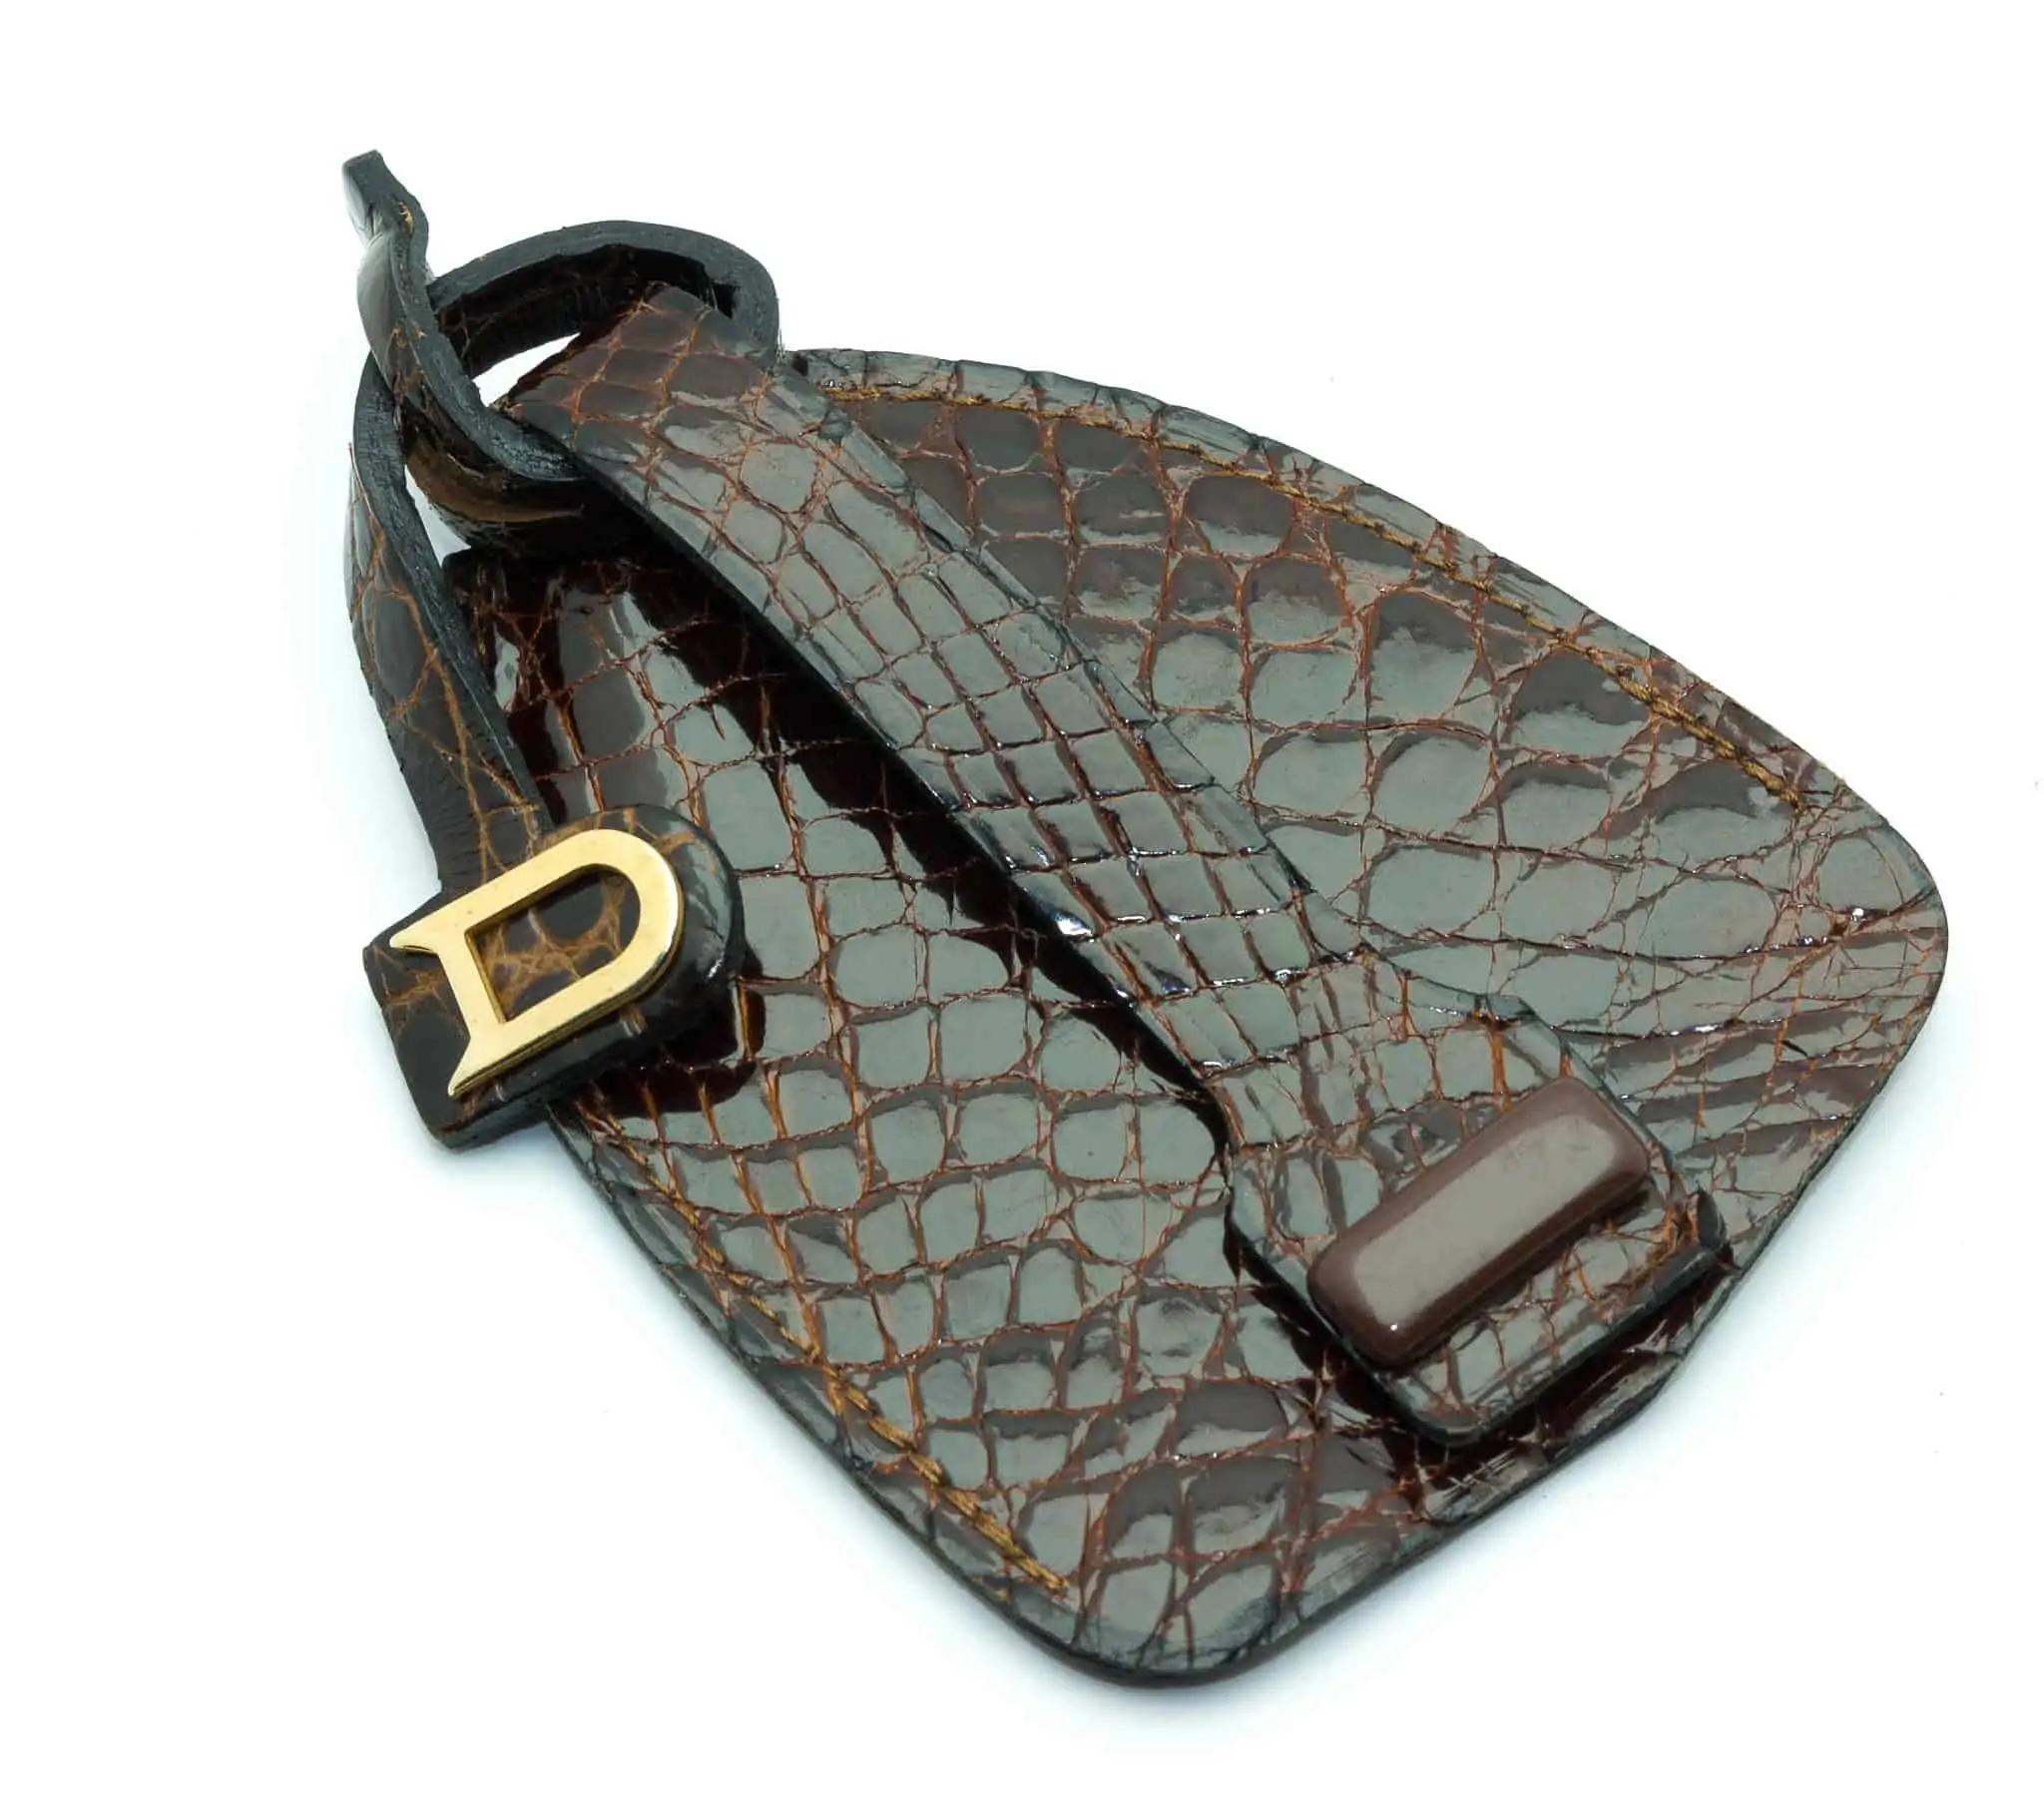 Shop Delvaux, Luxury Handbags